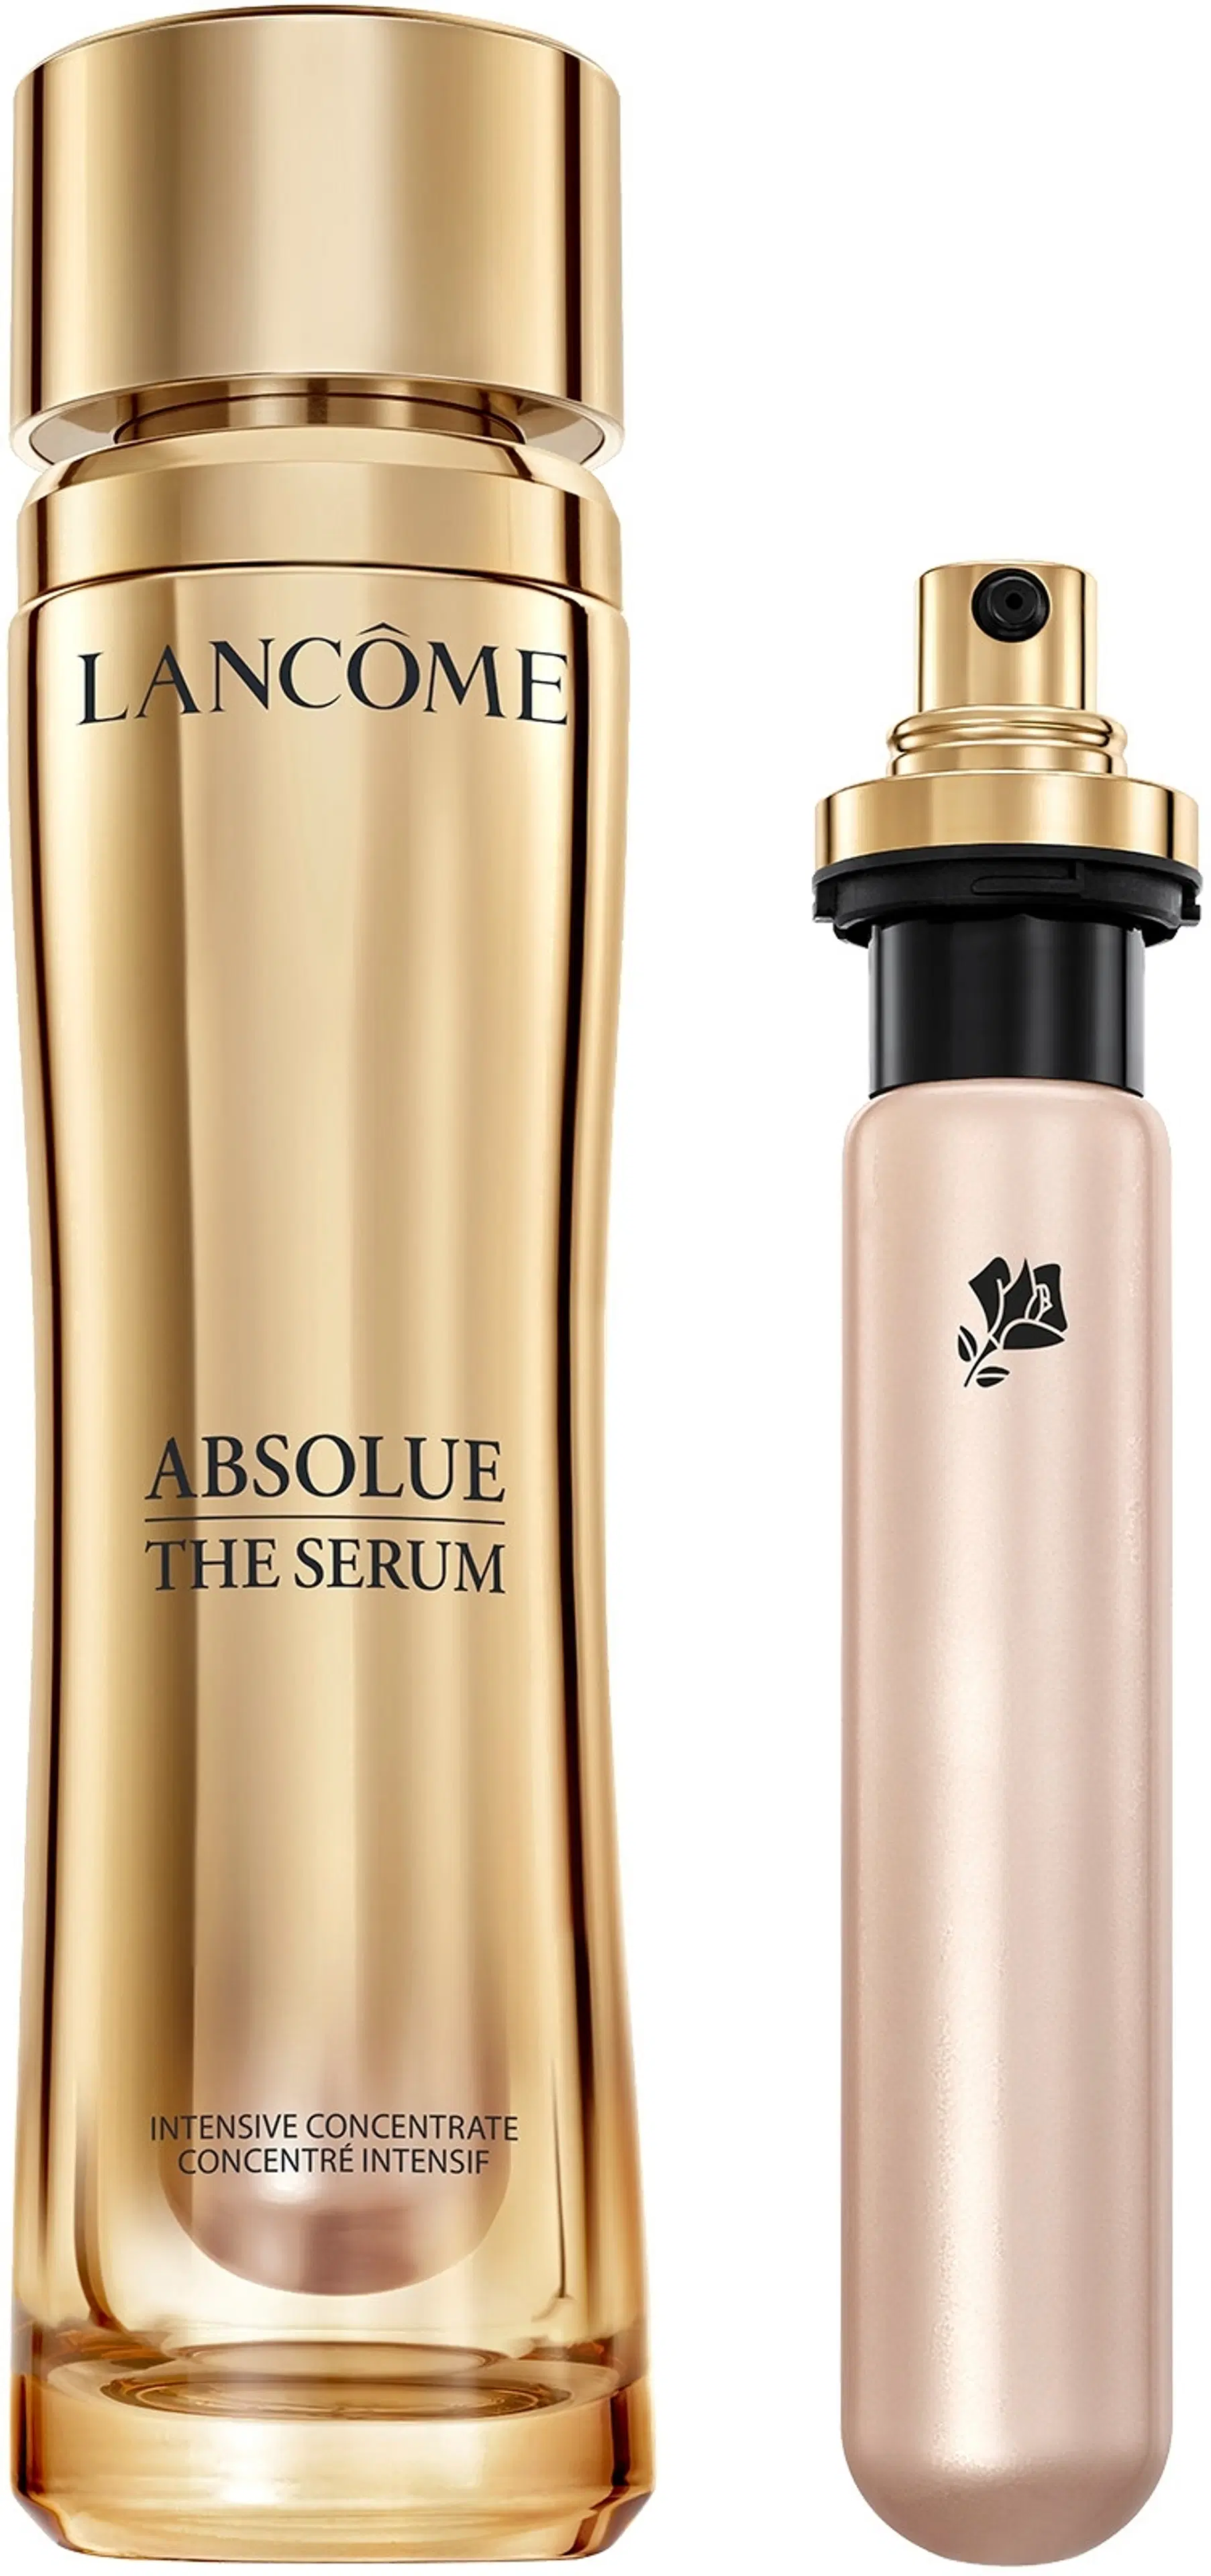 Lancôme Absolue The Serum Refill täyttöpakkaus 30 ml